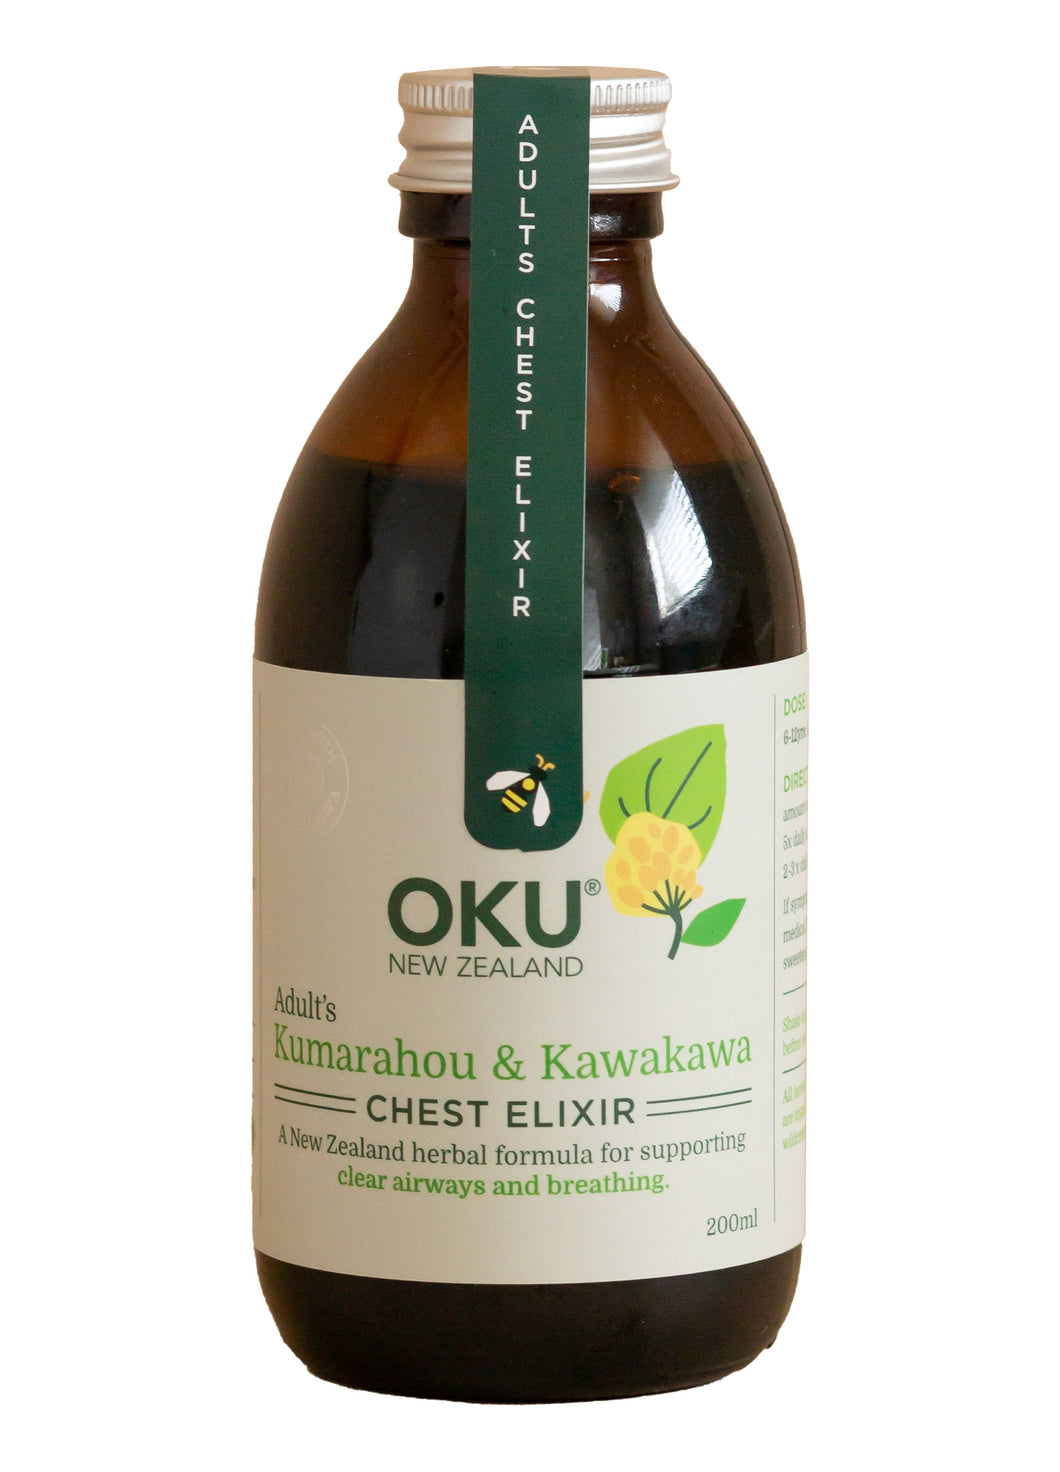 ŌKU Cough & Chest Elixir 200ml - Adult's